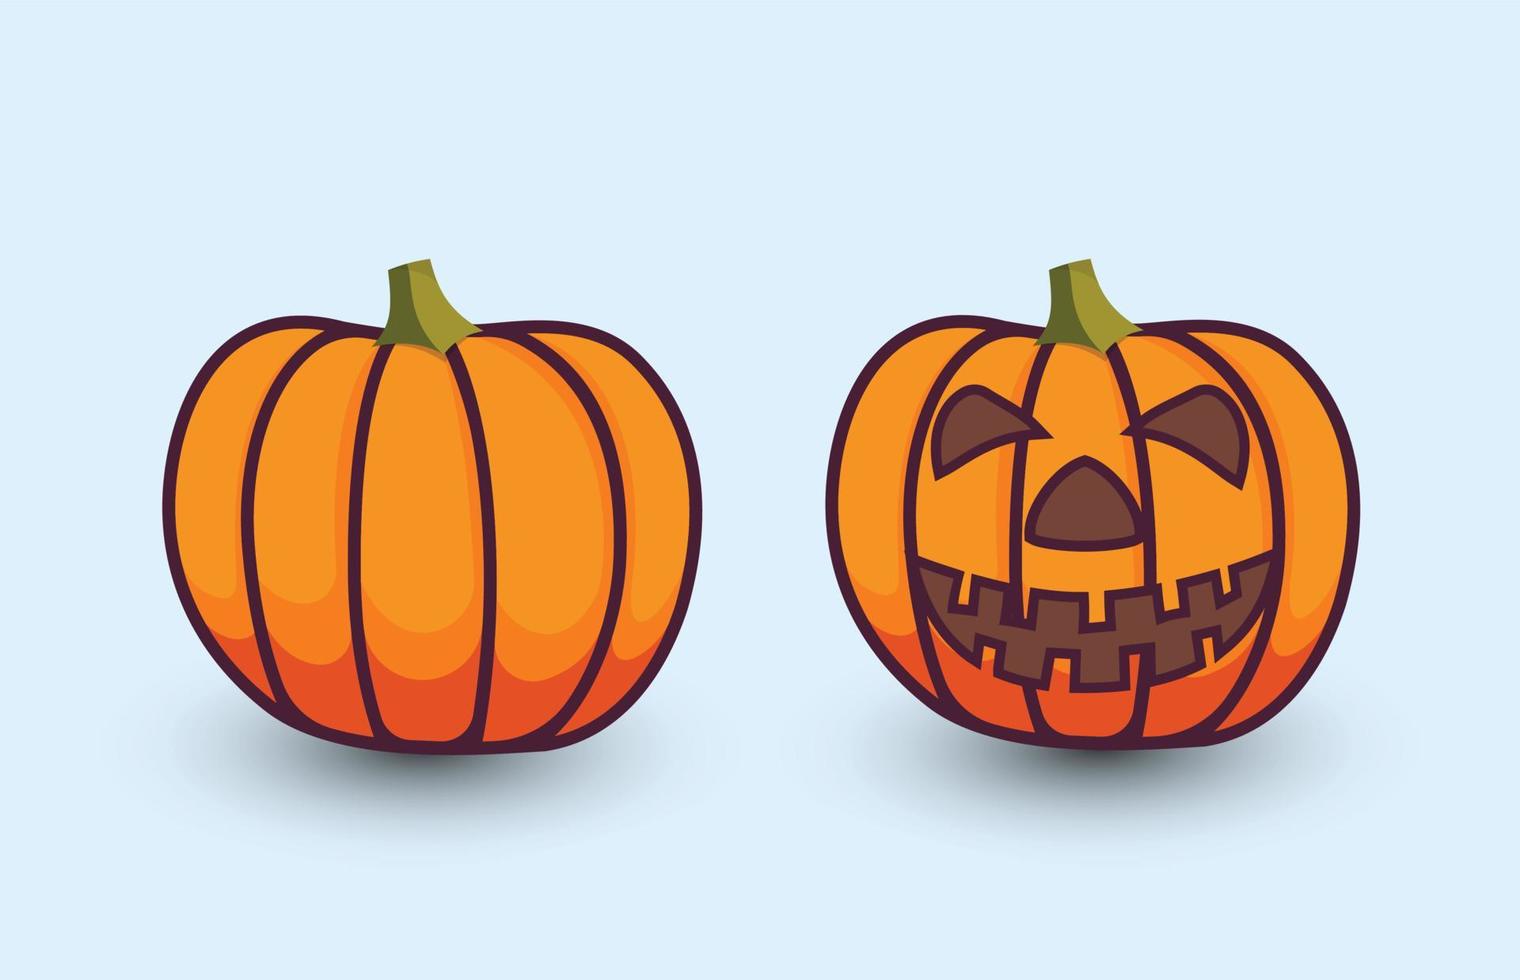 diseño vectorial de ilustración de halloween con imágenes prediseñadas de ilustración de calabaza dulce, concepto único mínimo creativo. vector